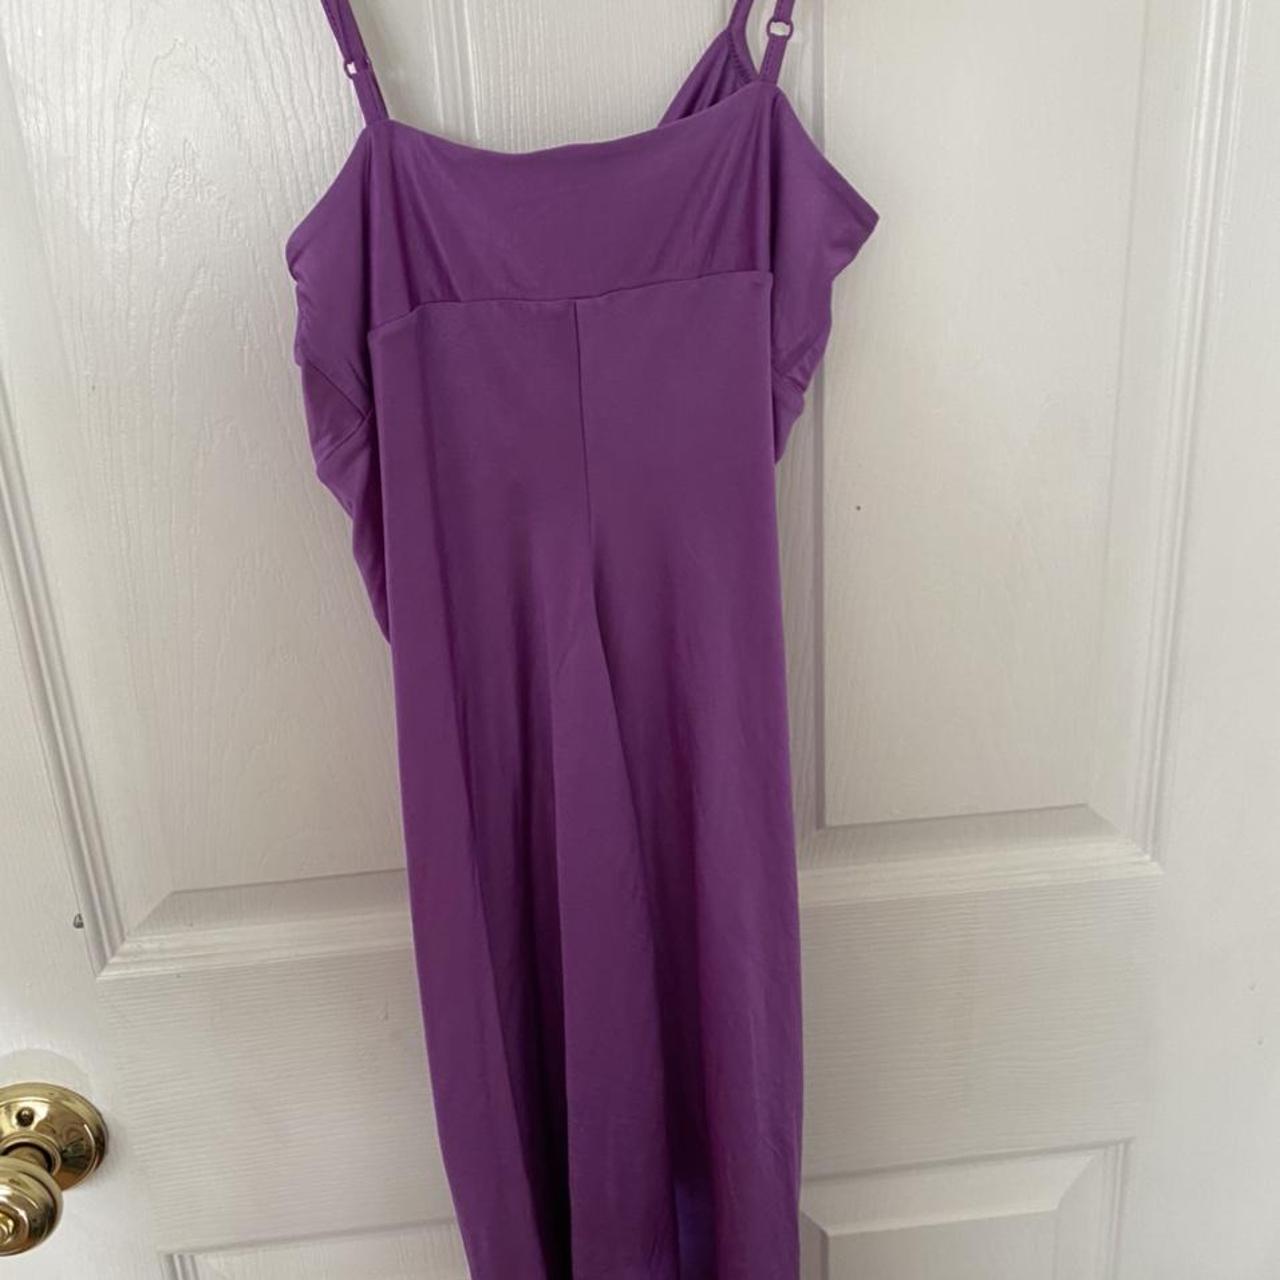 purple armani slip dress so cute and in great... - Depop